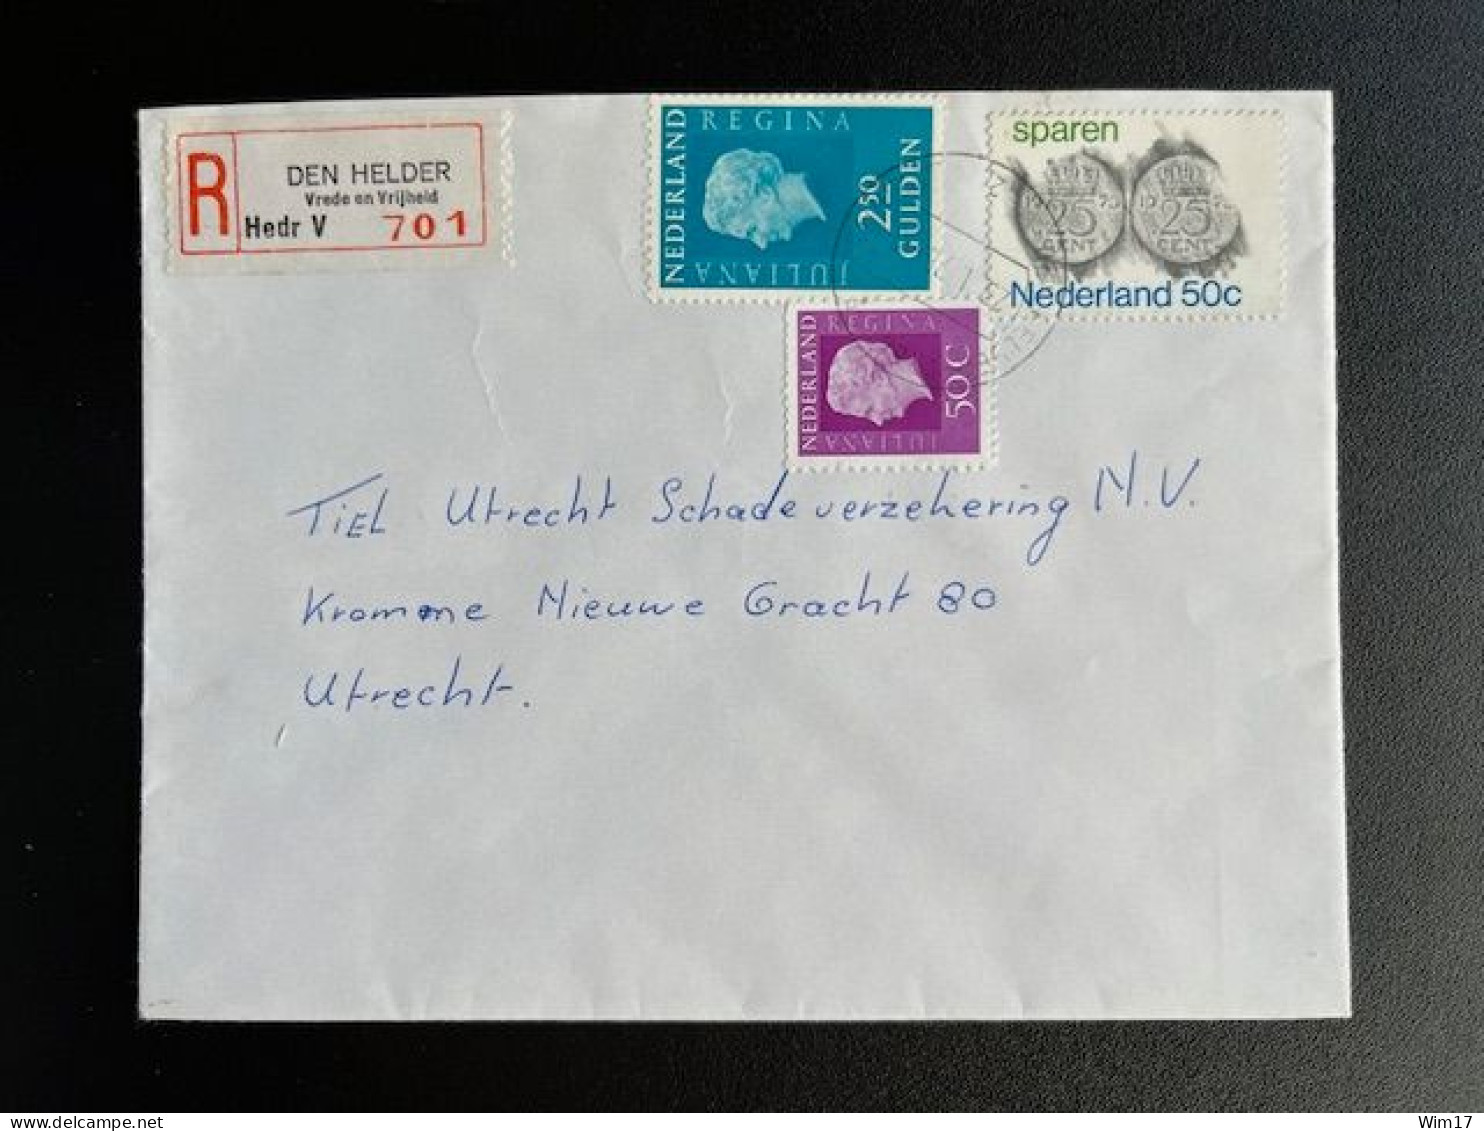 NETHERLANDS 1976 REGISTERED LETTER DEN HELDER VREDE EN VRIJHEIDPLEIN TO UTRECHT 23-01-1976 NEDERLAND AANGETEKEND - Covers & Documents